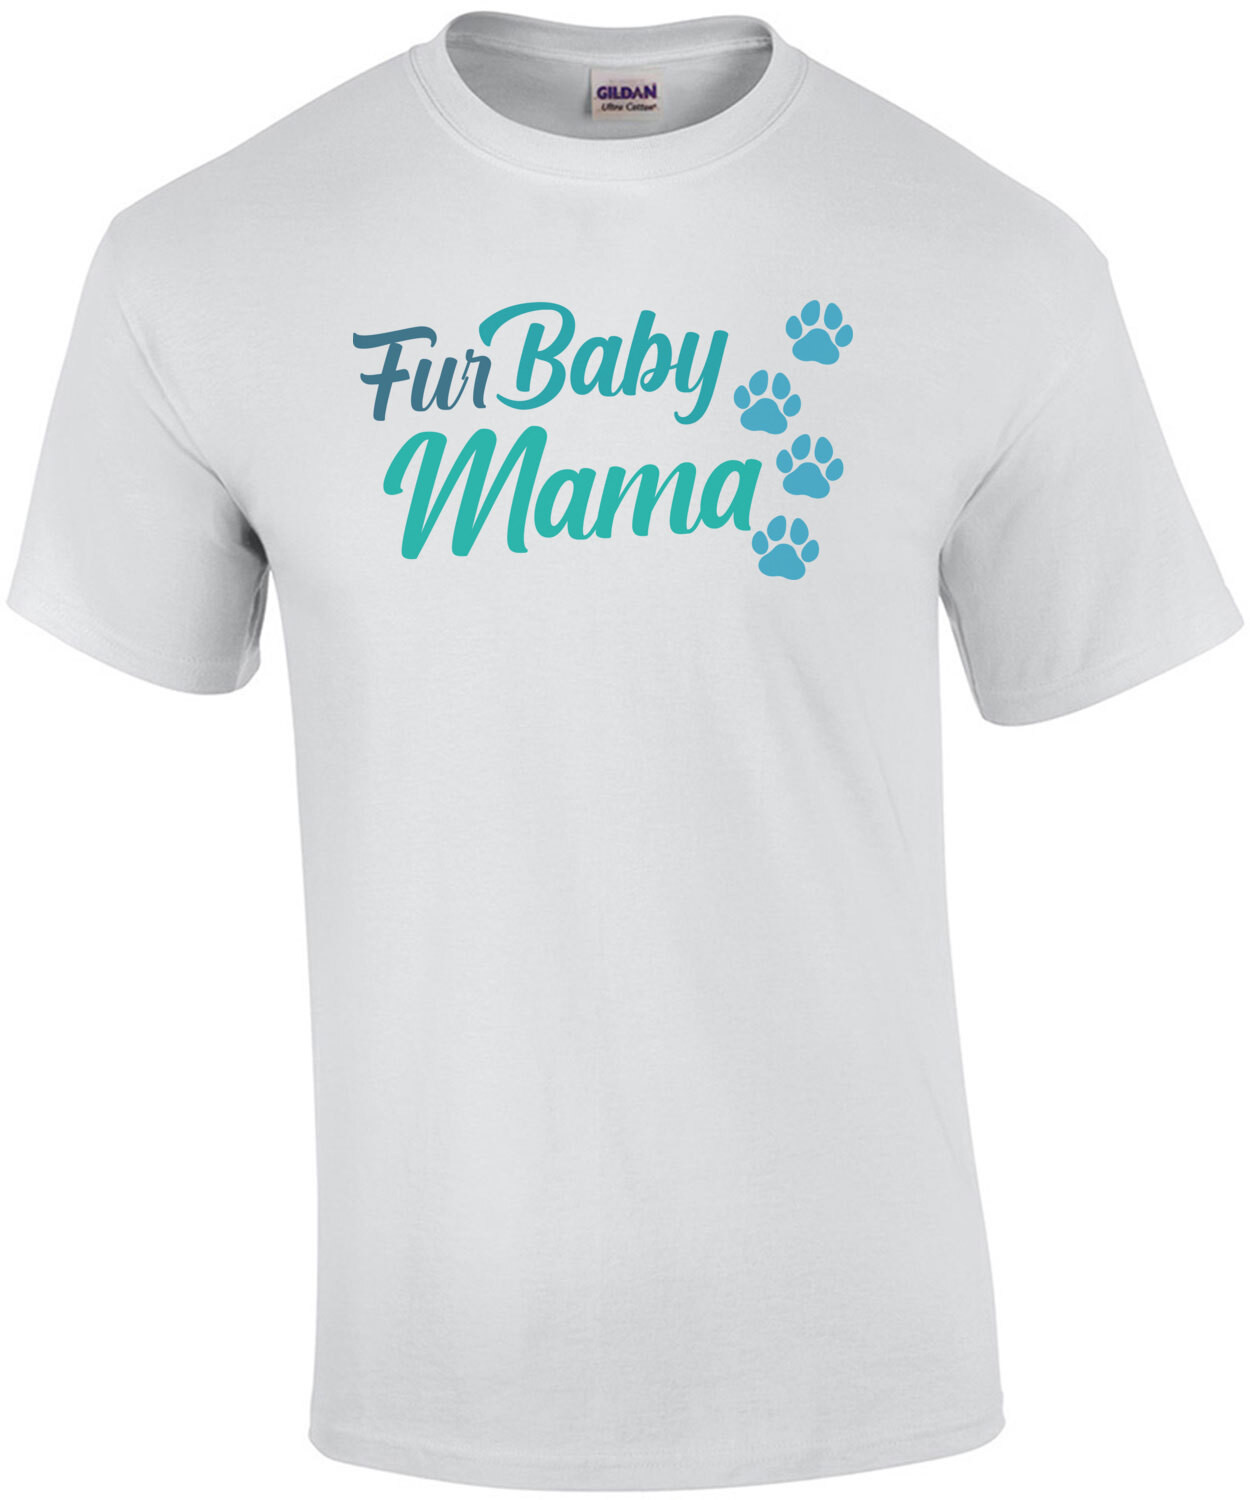 Fur Baby Mama - Dog T-Shirt